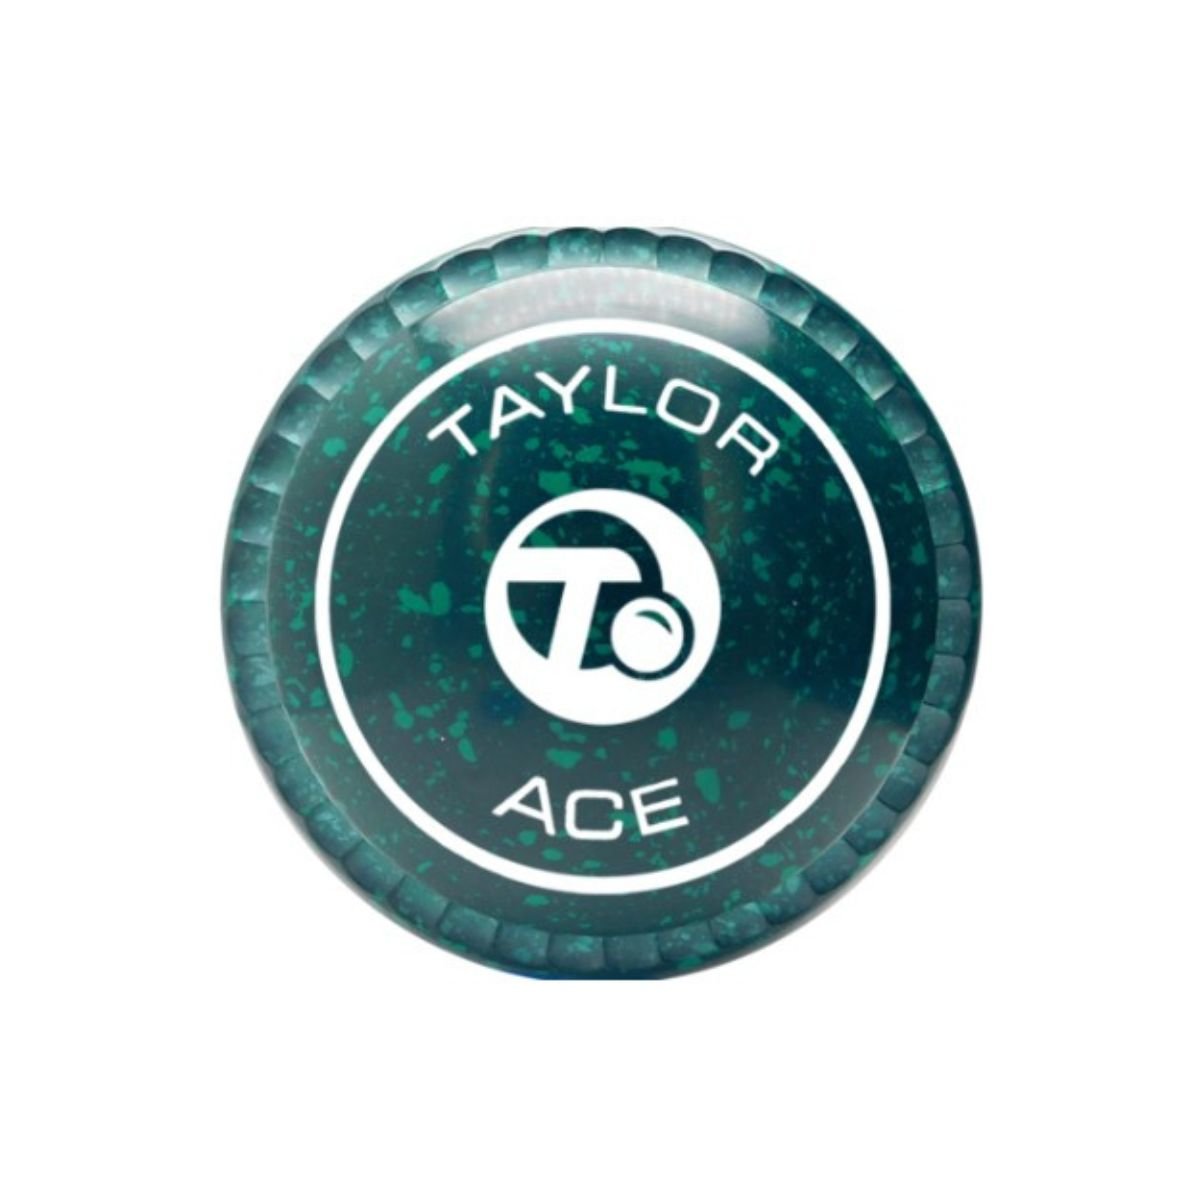 Taylor ace xtreme grip coloured bowls - 4